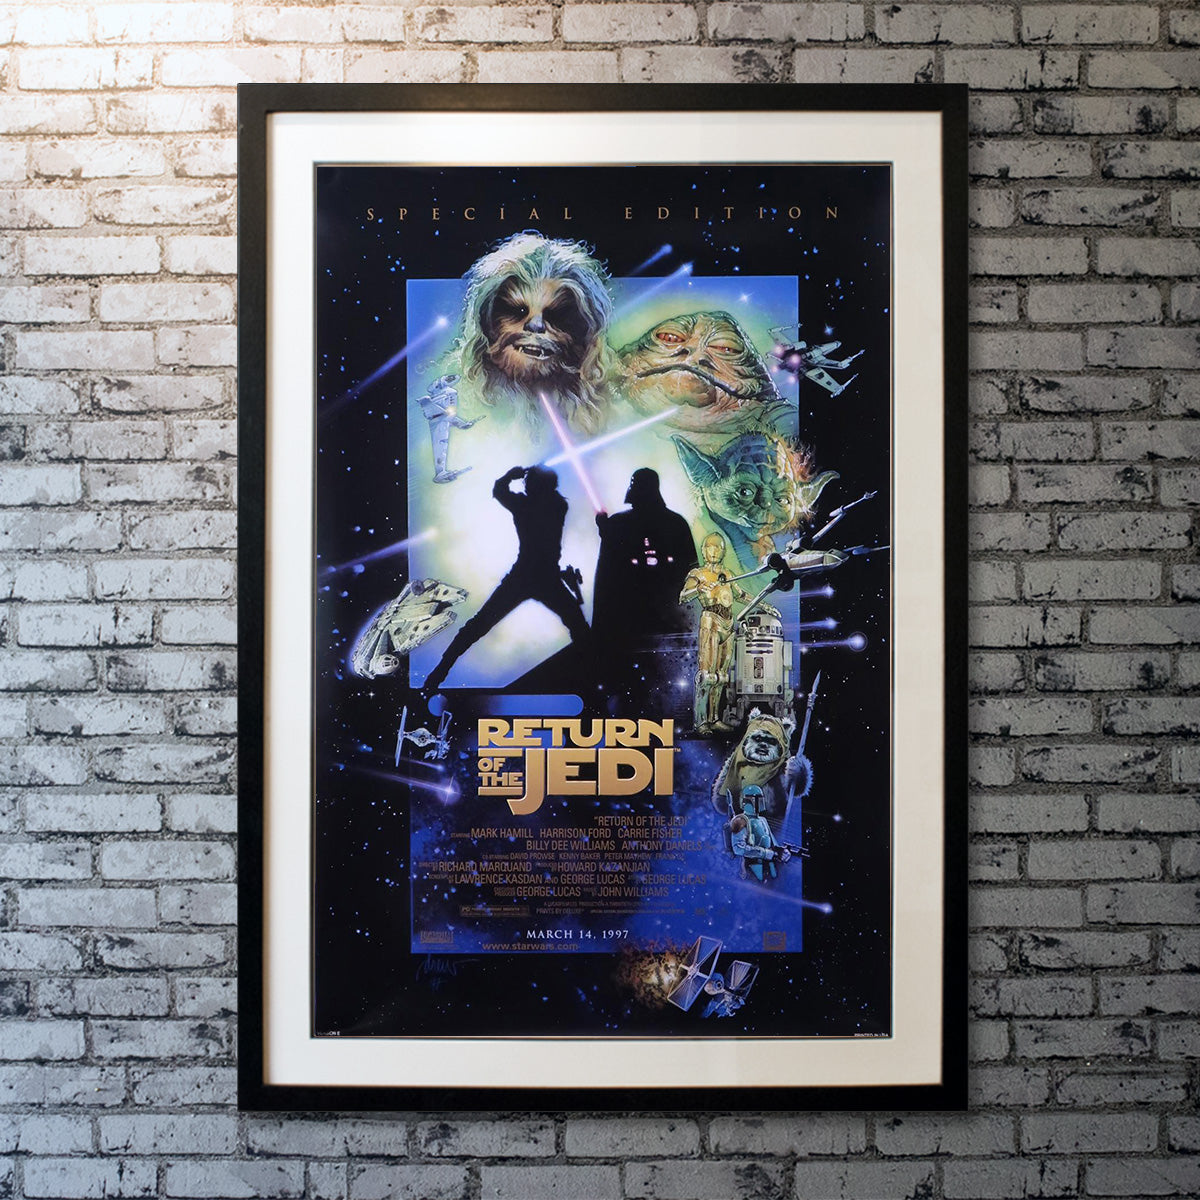 Original Movie Poster of Return Of The Jedi (1997R)